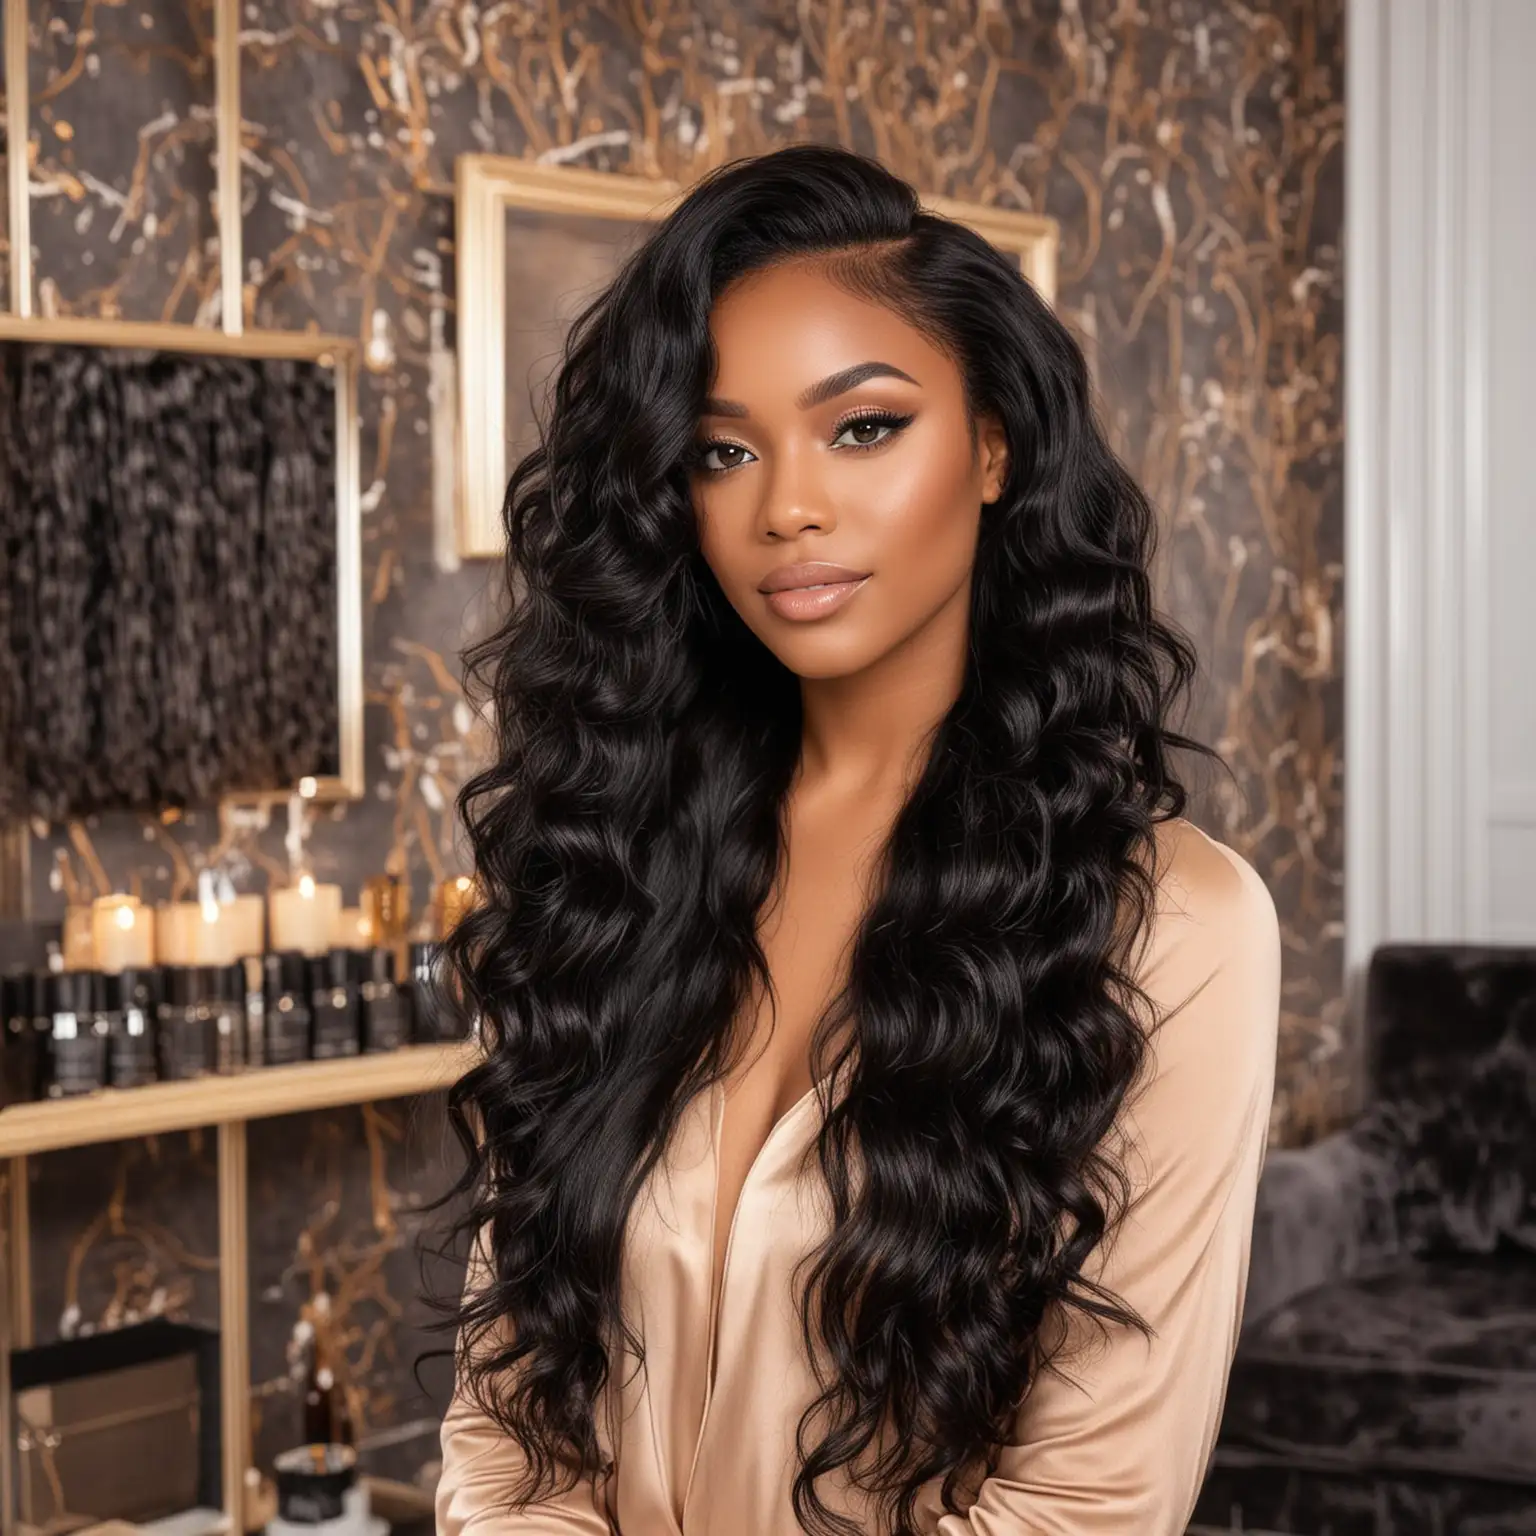 Luxury Portrait of a Stunning Black Woman with Elegant Black Hair Bundles